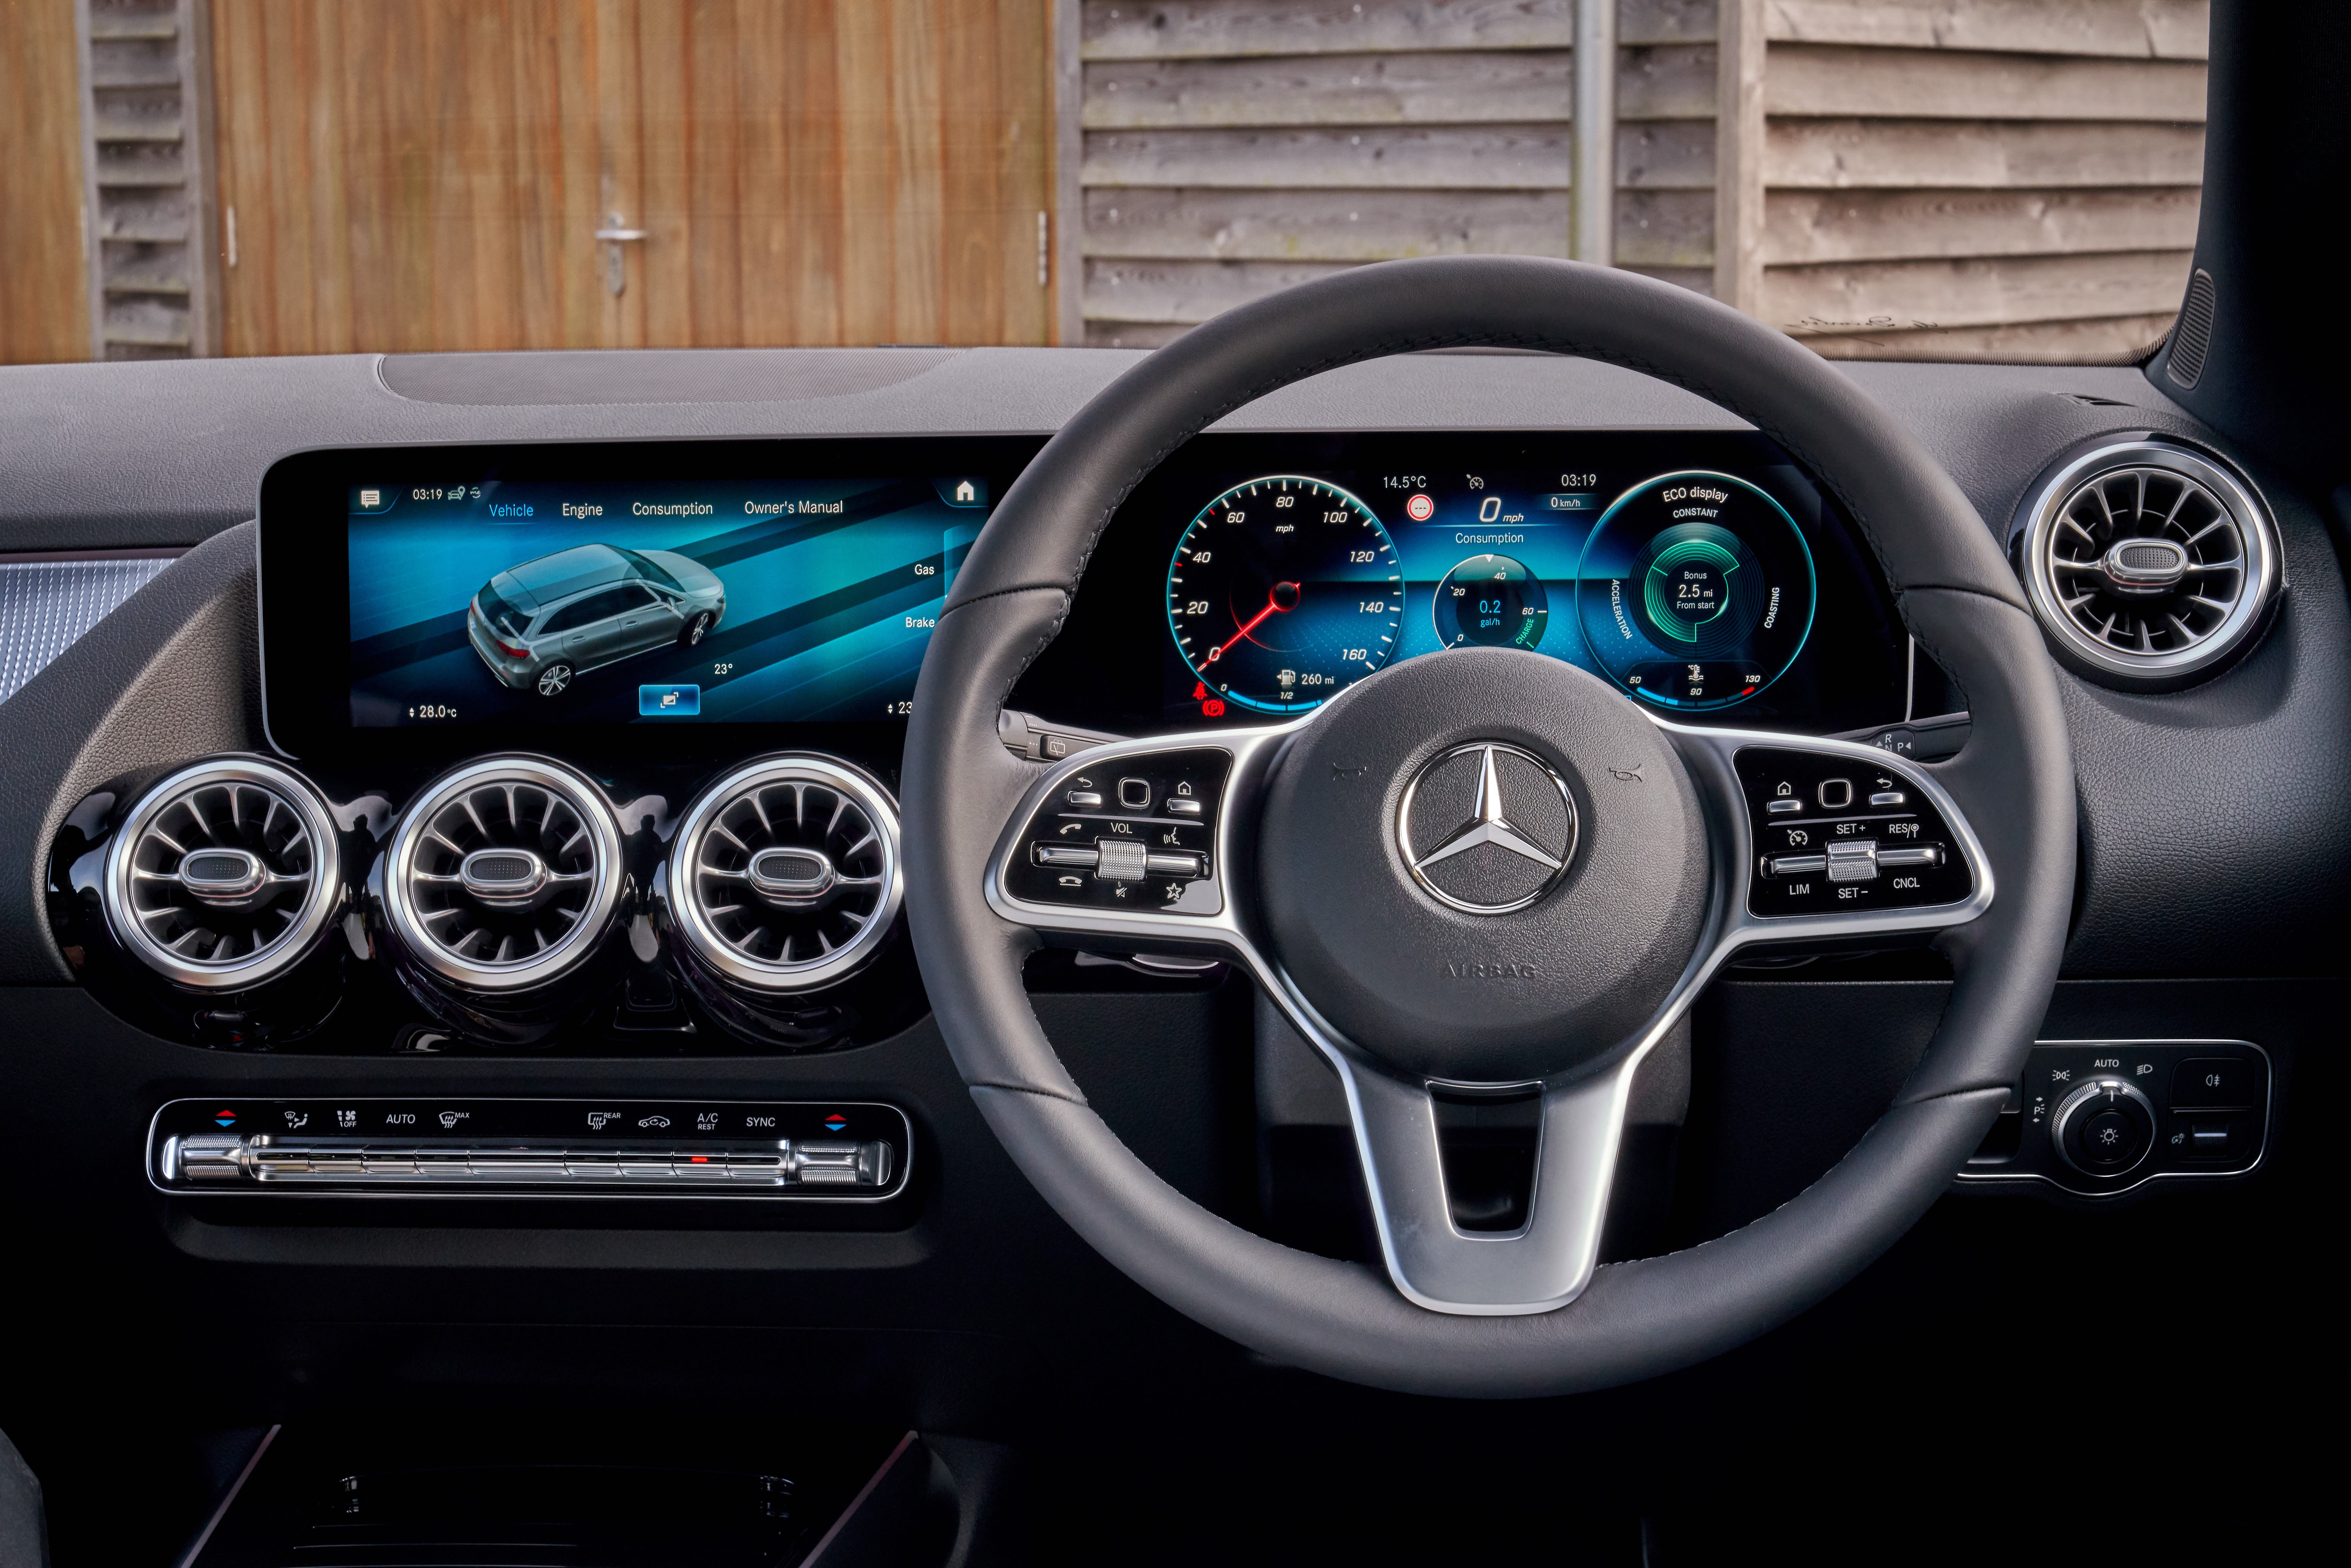 Mercedes B-Class 2019 front interior